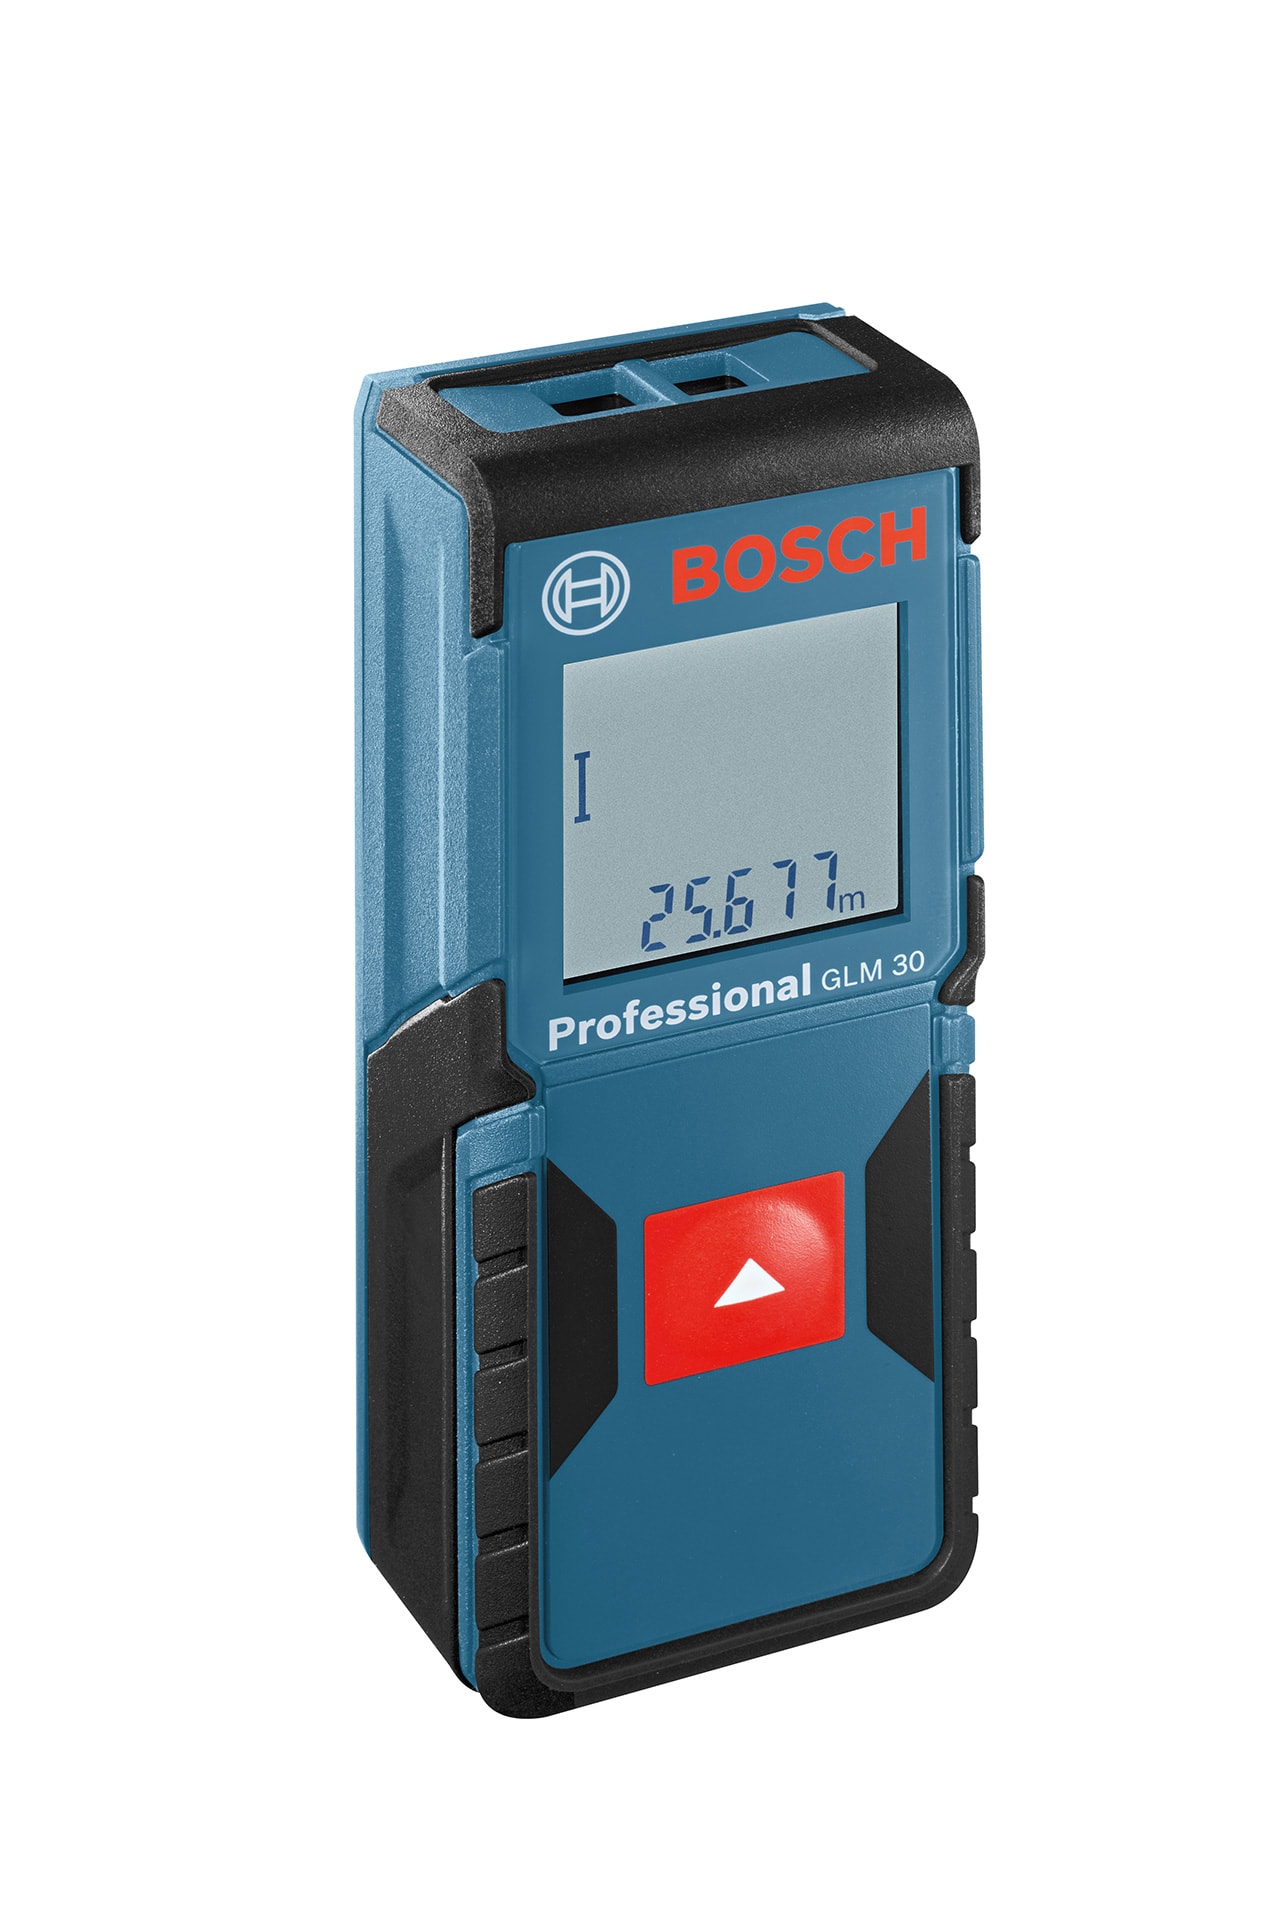 Bosch Laser-avstandsmåler GLM 30 Professional med 2 batterier (AAA), tilbehørssett